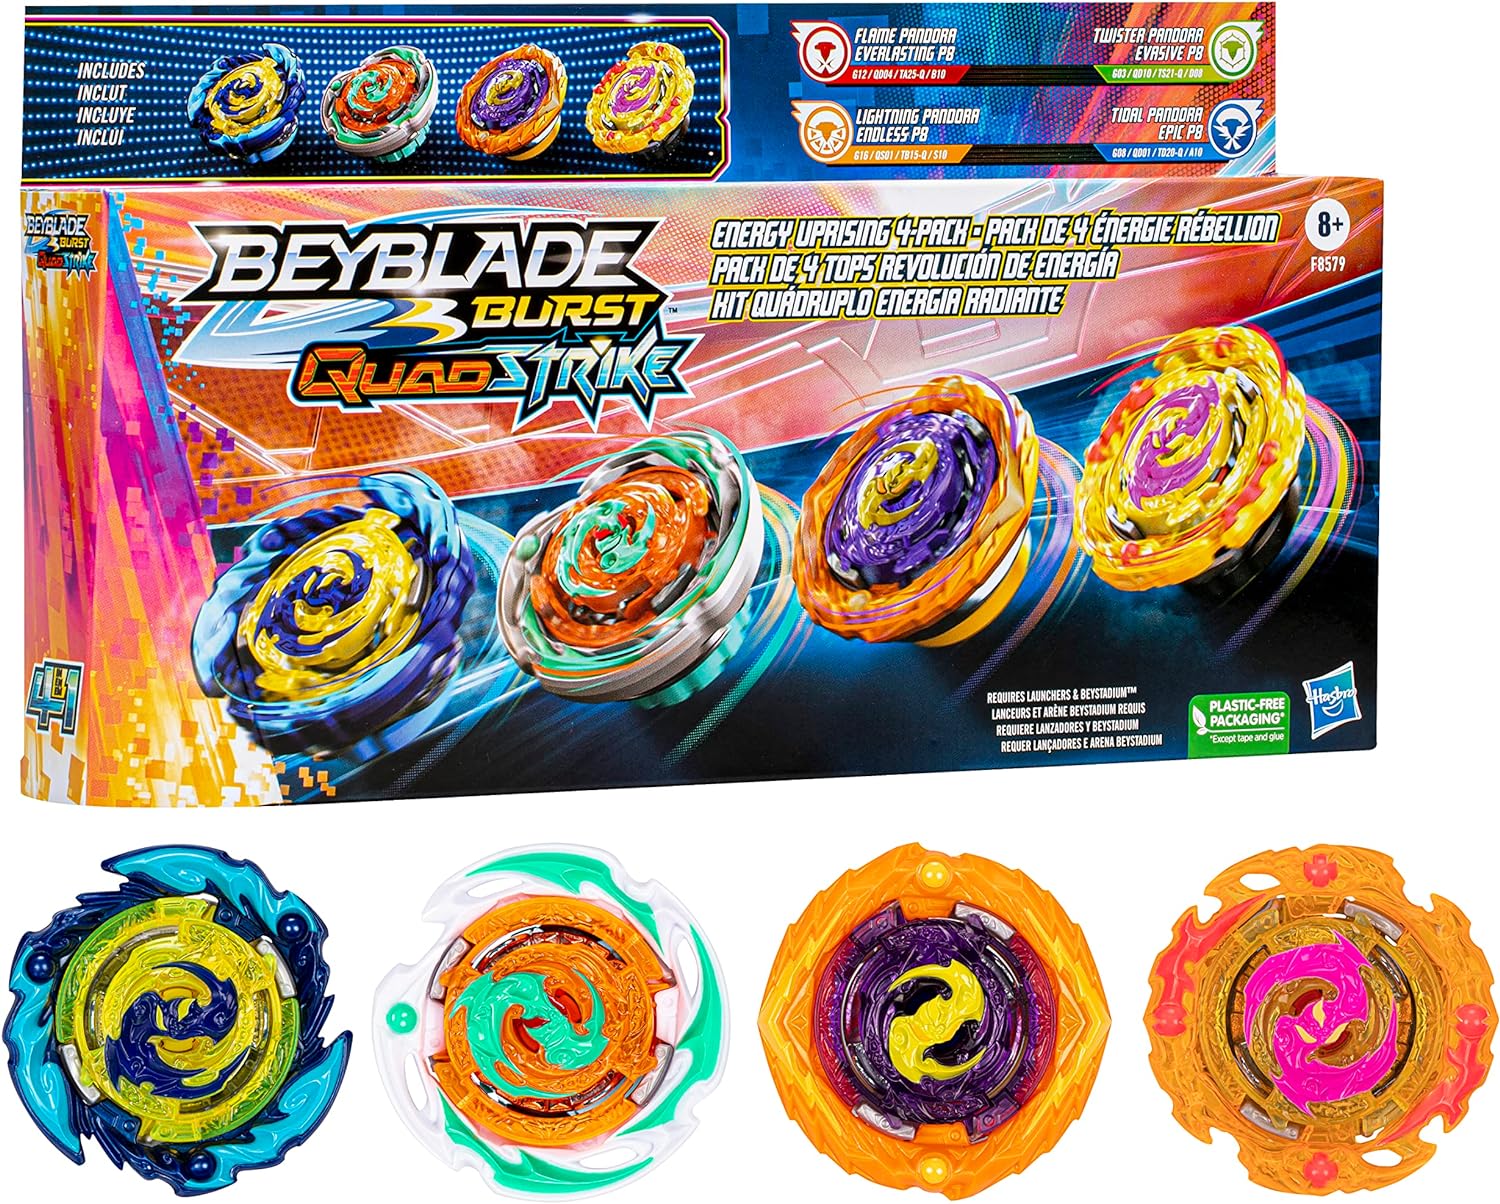 Beyblade Burst QuadStrike Hydra Poseidon P8 Spinning Top Starter Pack,  Balance/Defense Type Battling Game with Launcher, Kids Toy Set